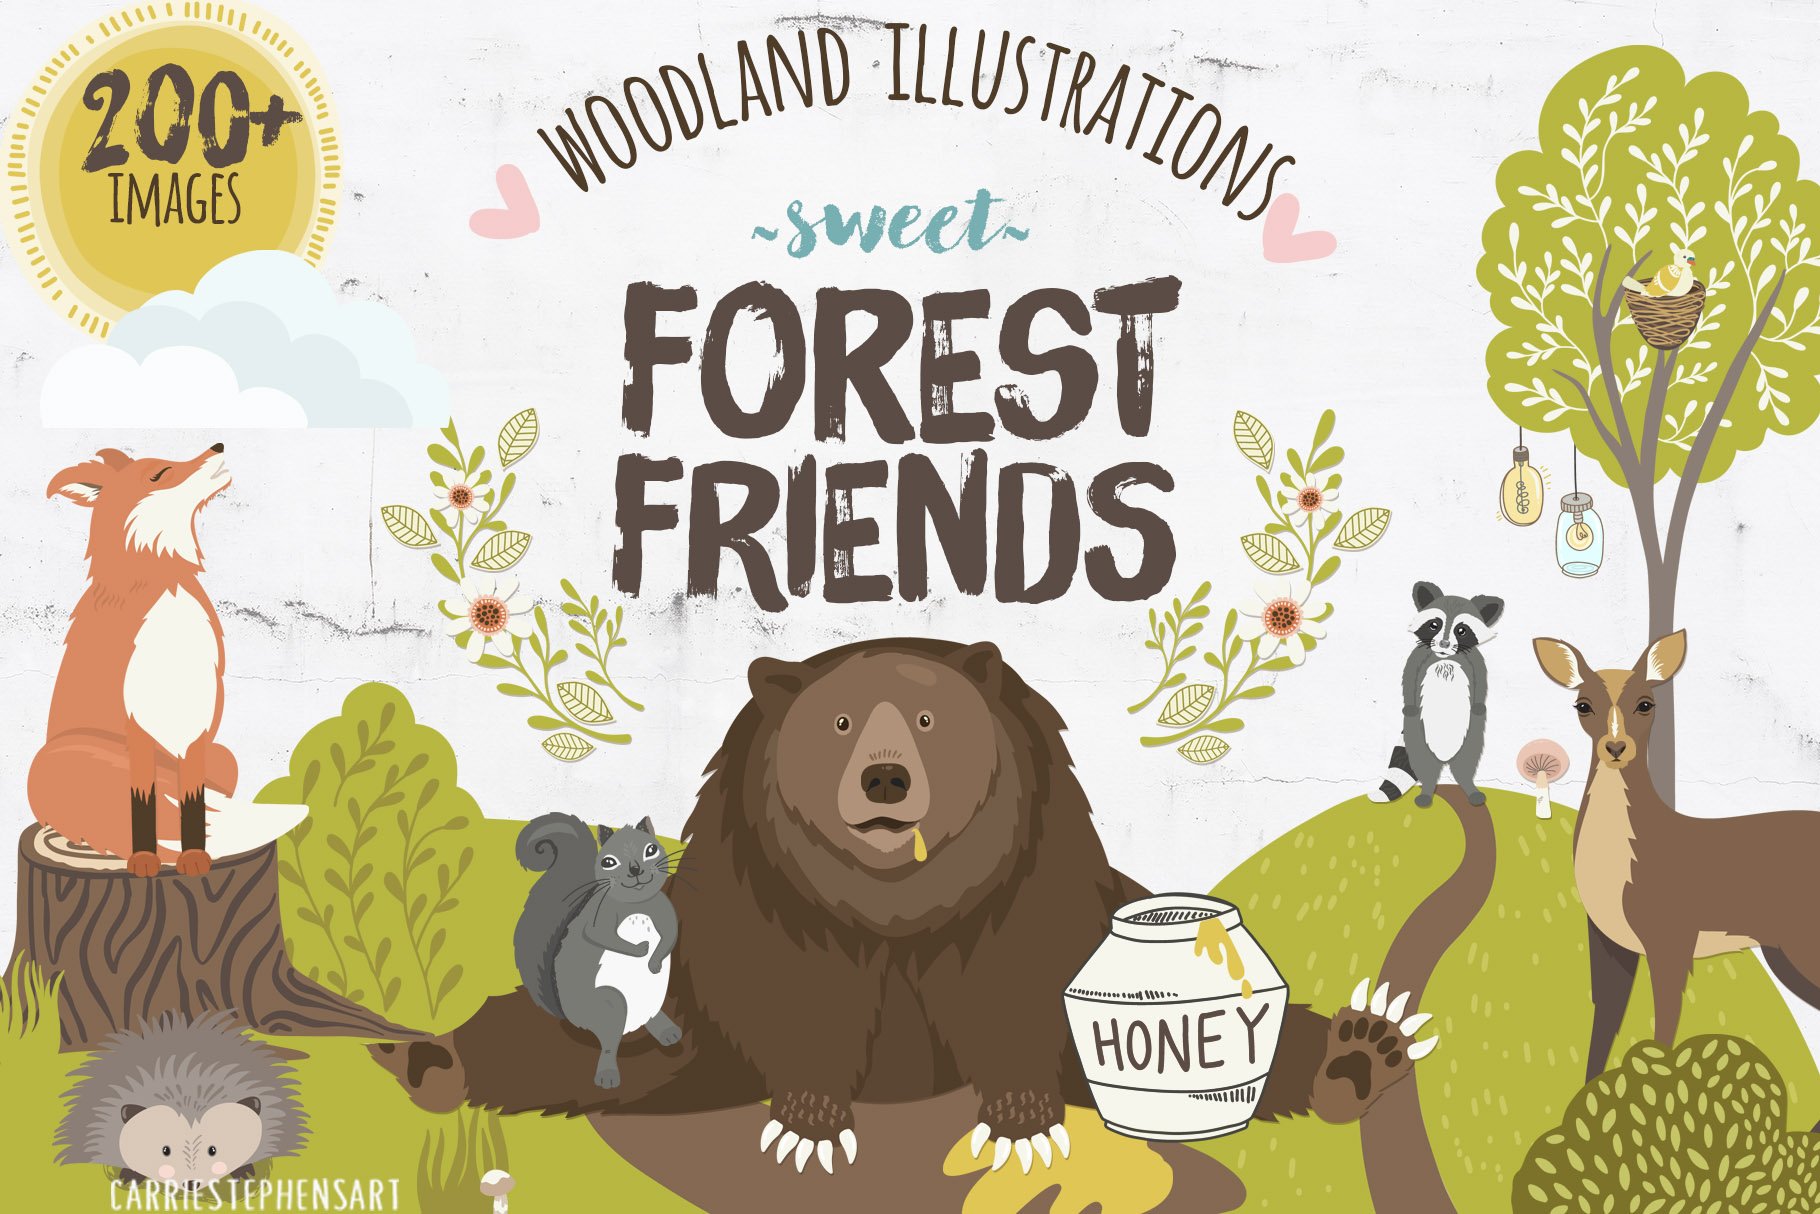 可爱的林地动物插画 Woodland Animal Cute